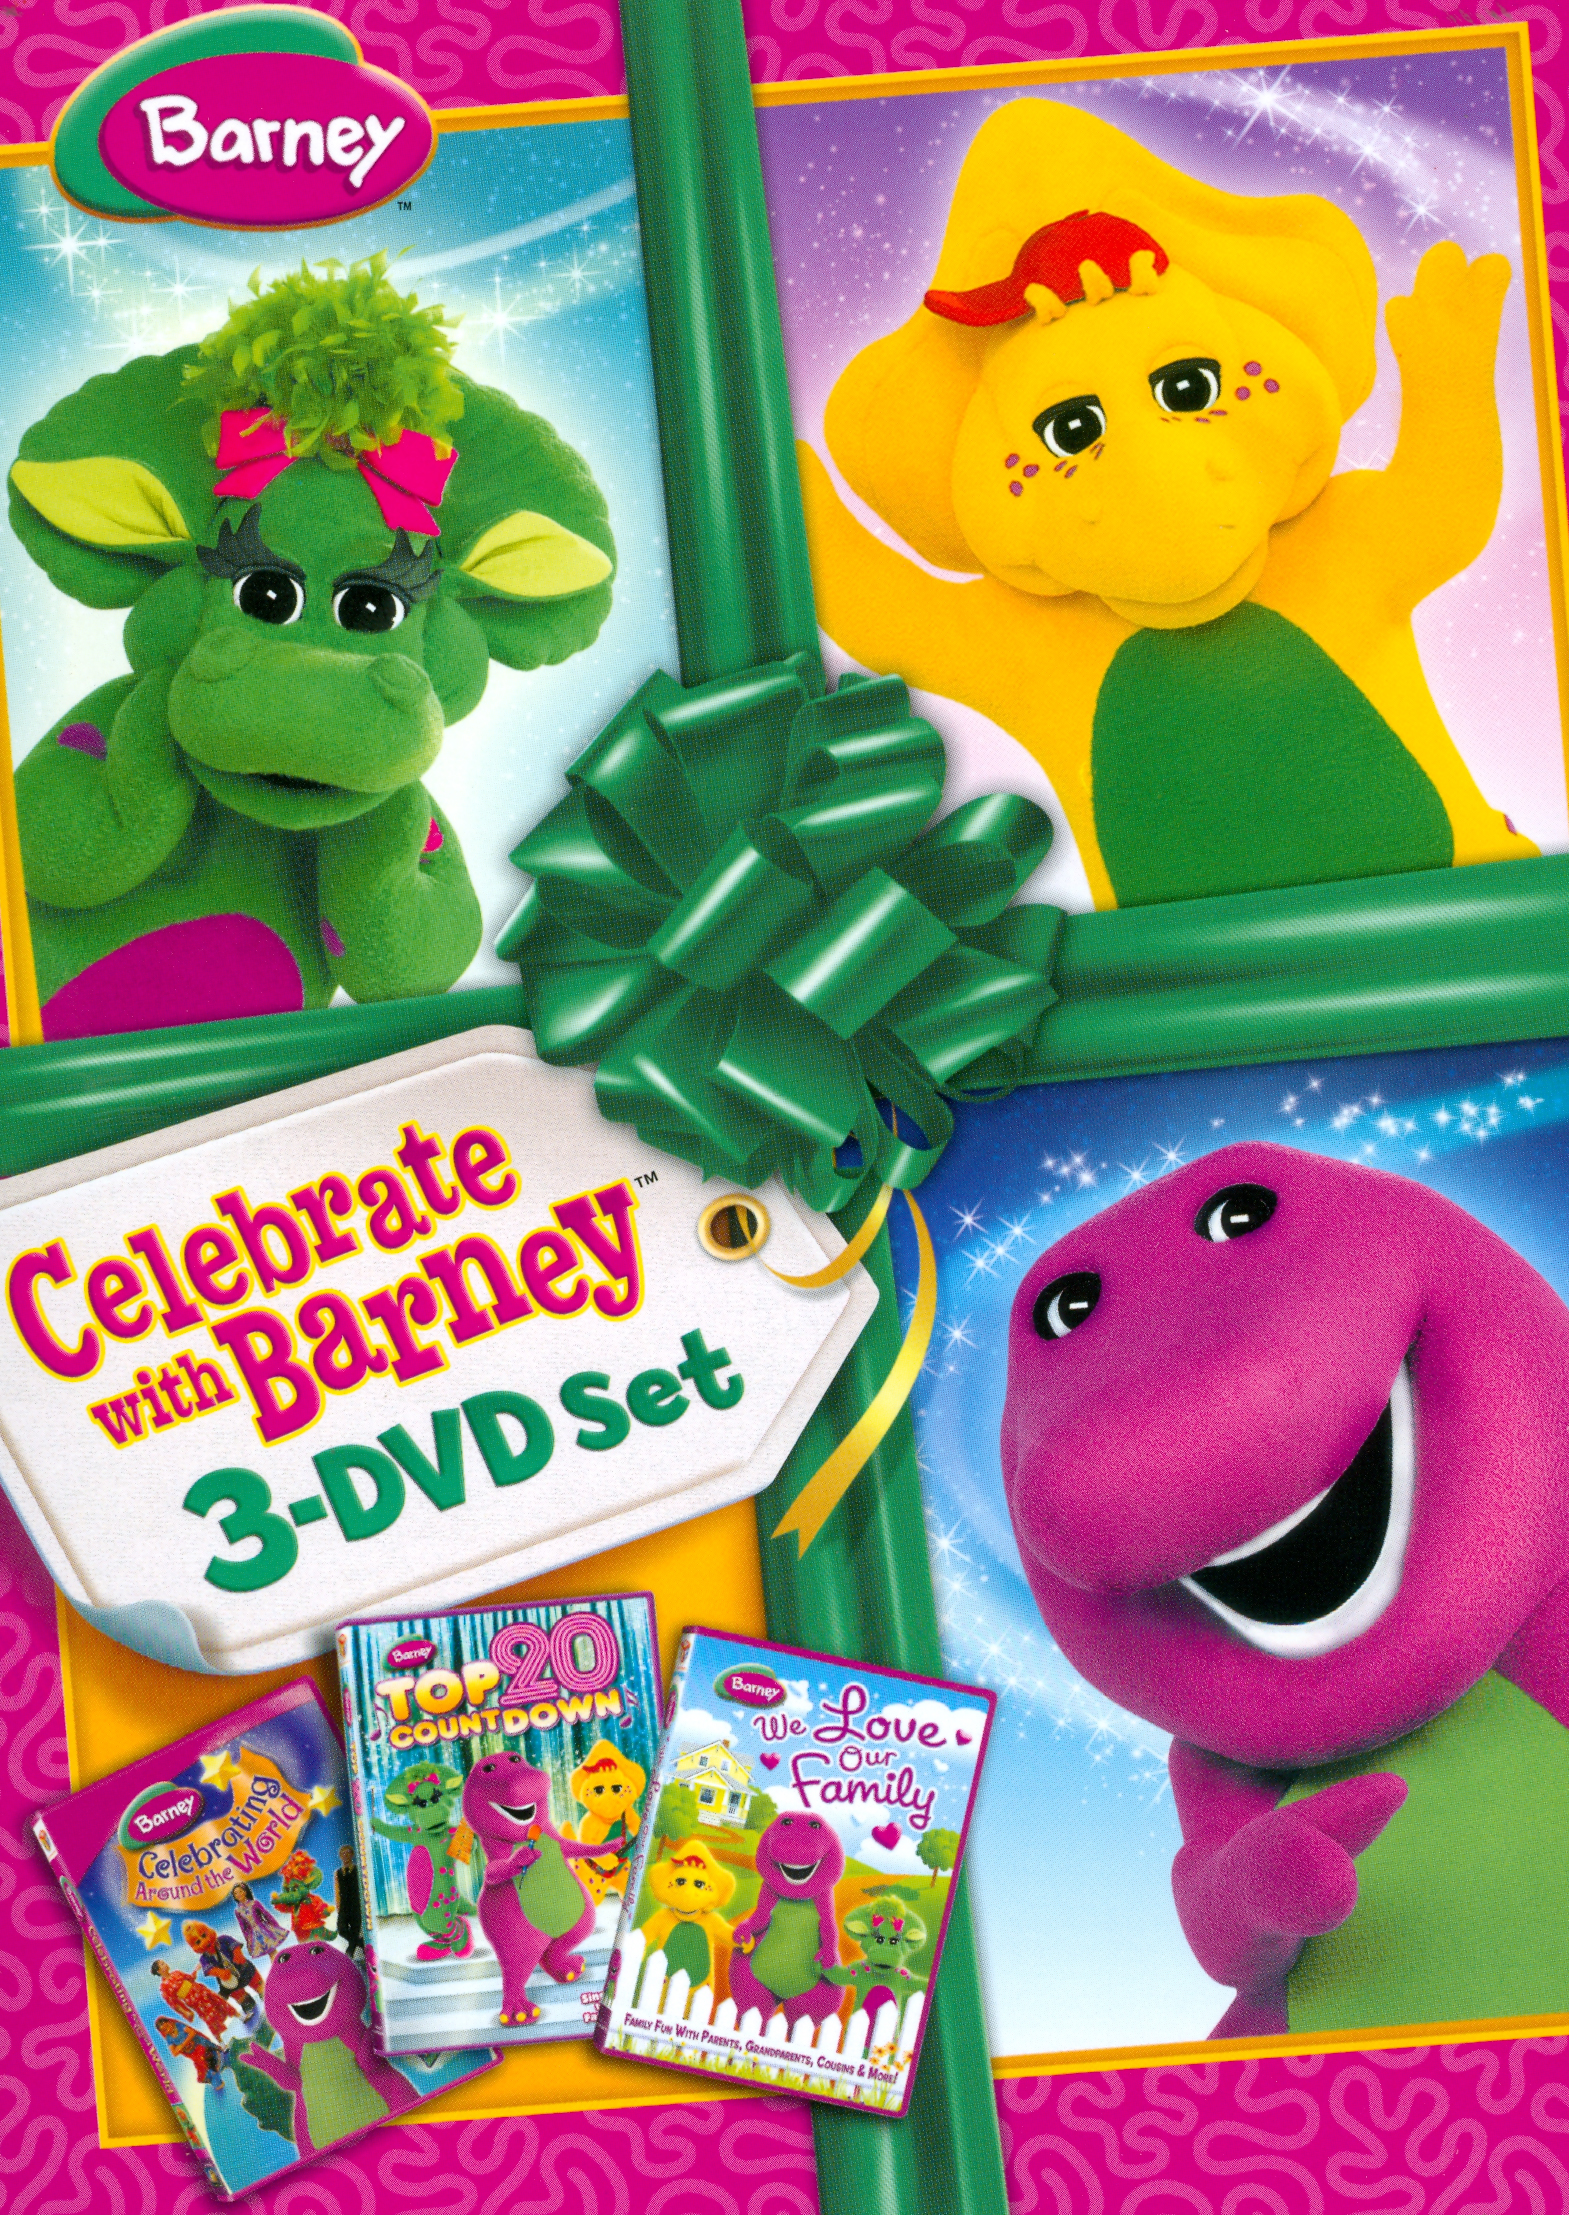 Best Buy: Barney: Celebrate with Barney [3 Discs] [DVD]